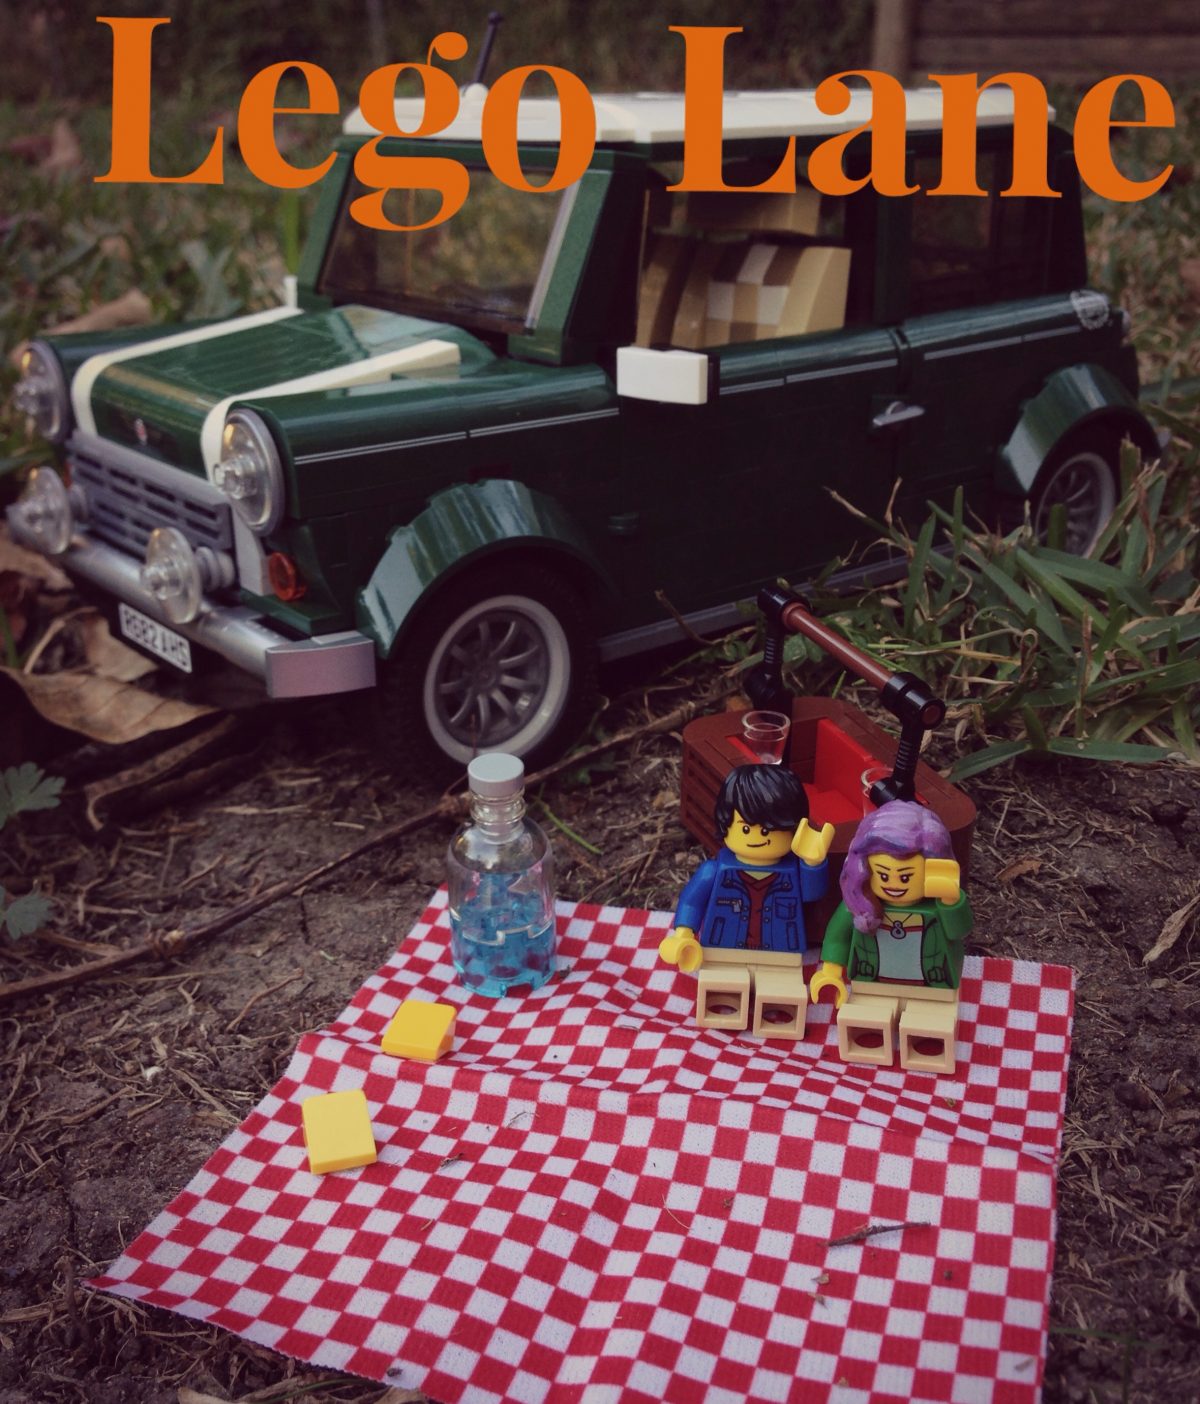 Lego lane